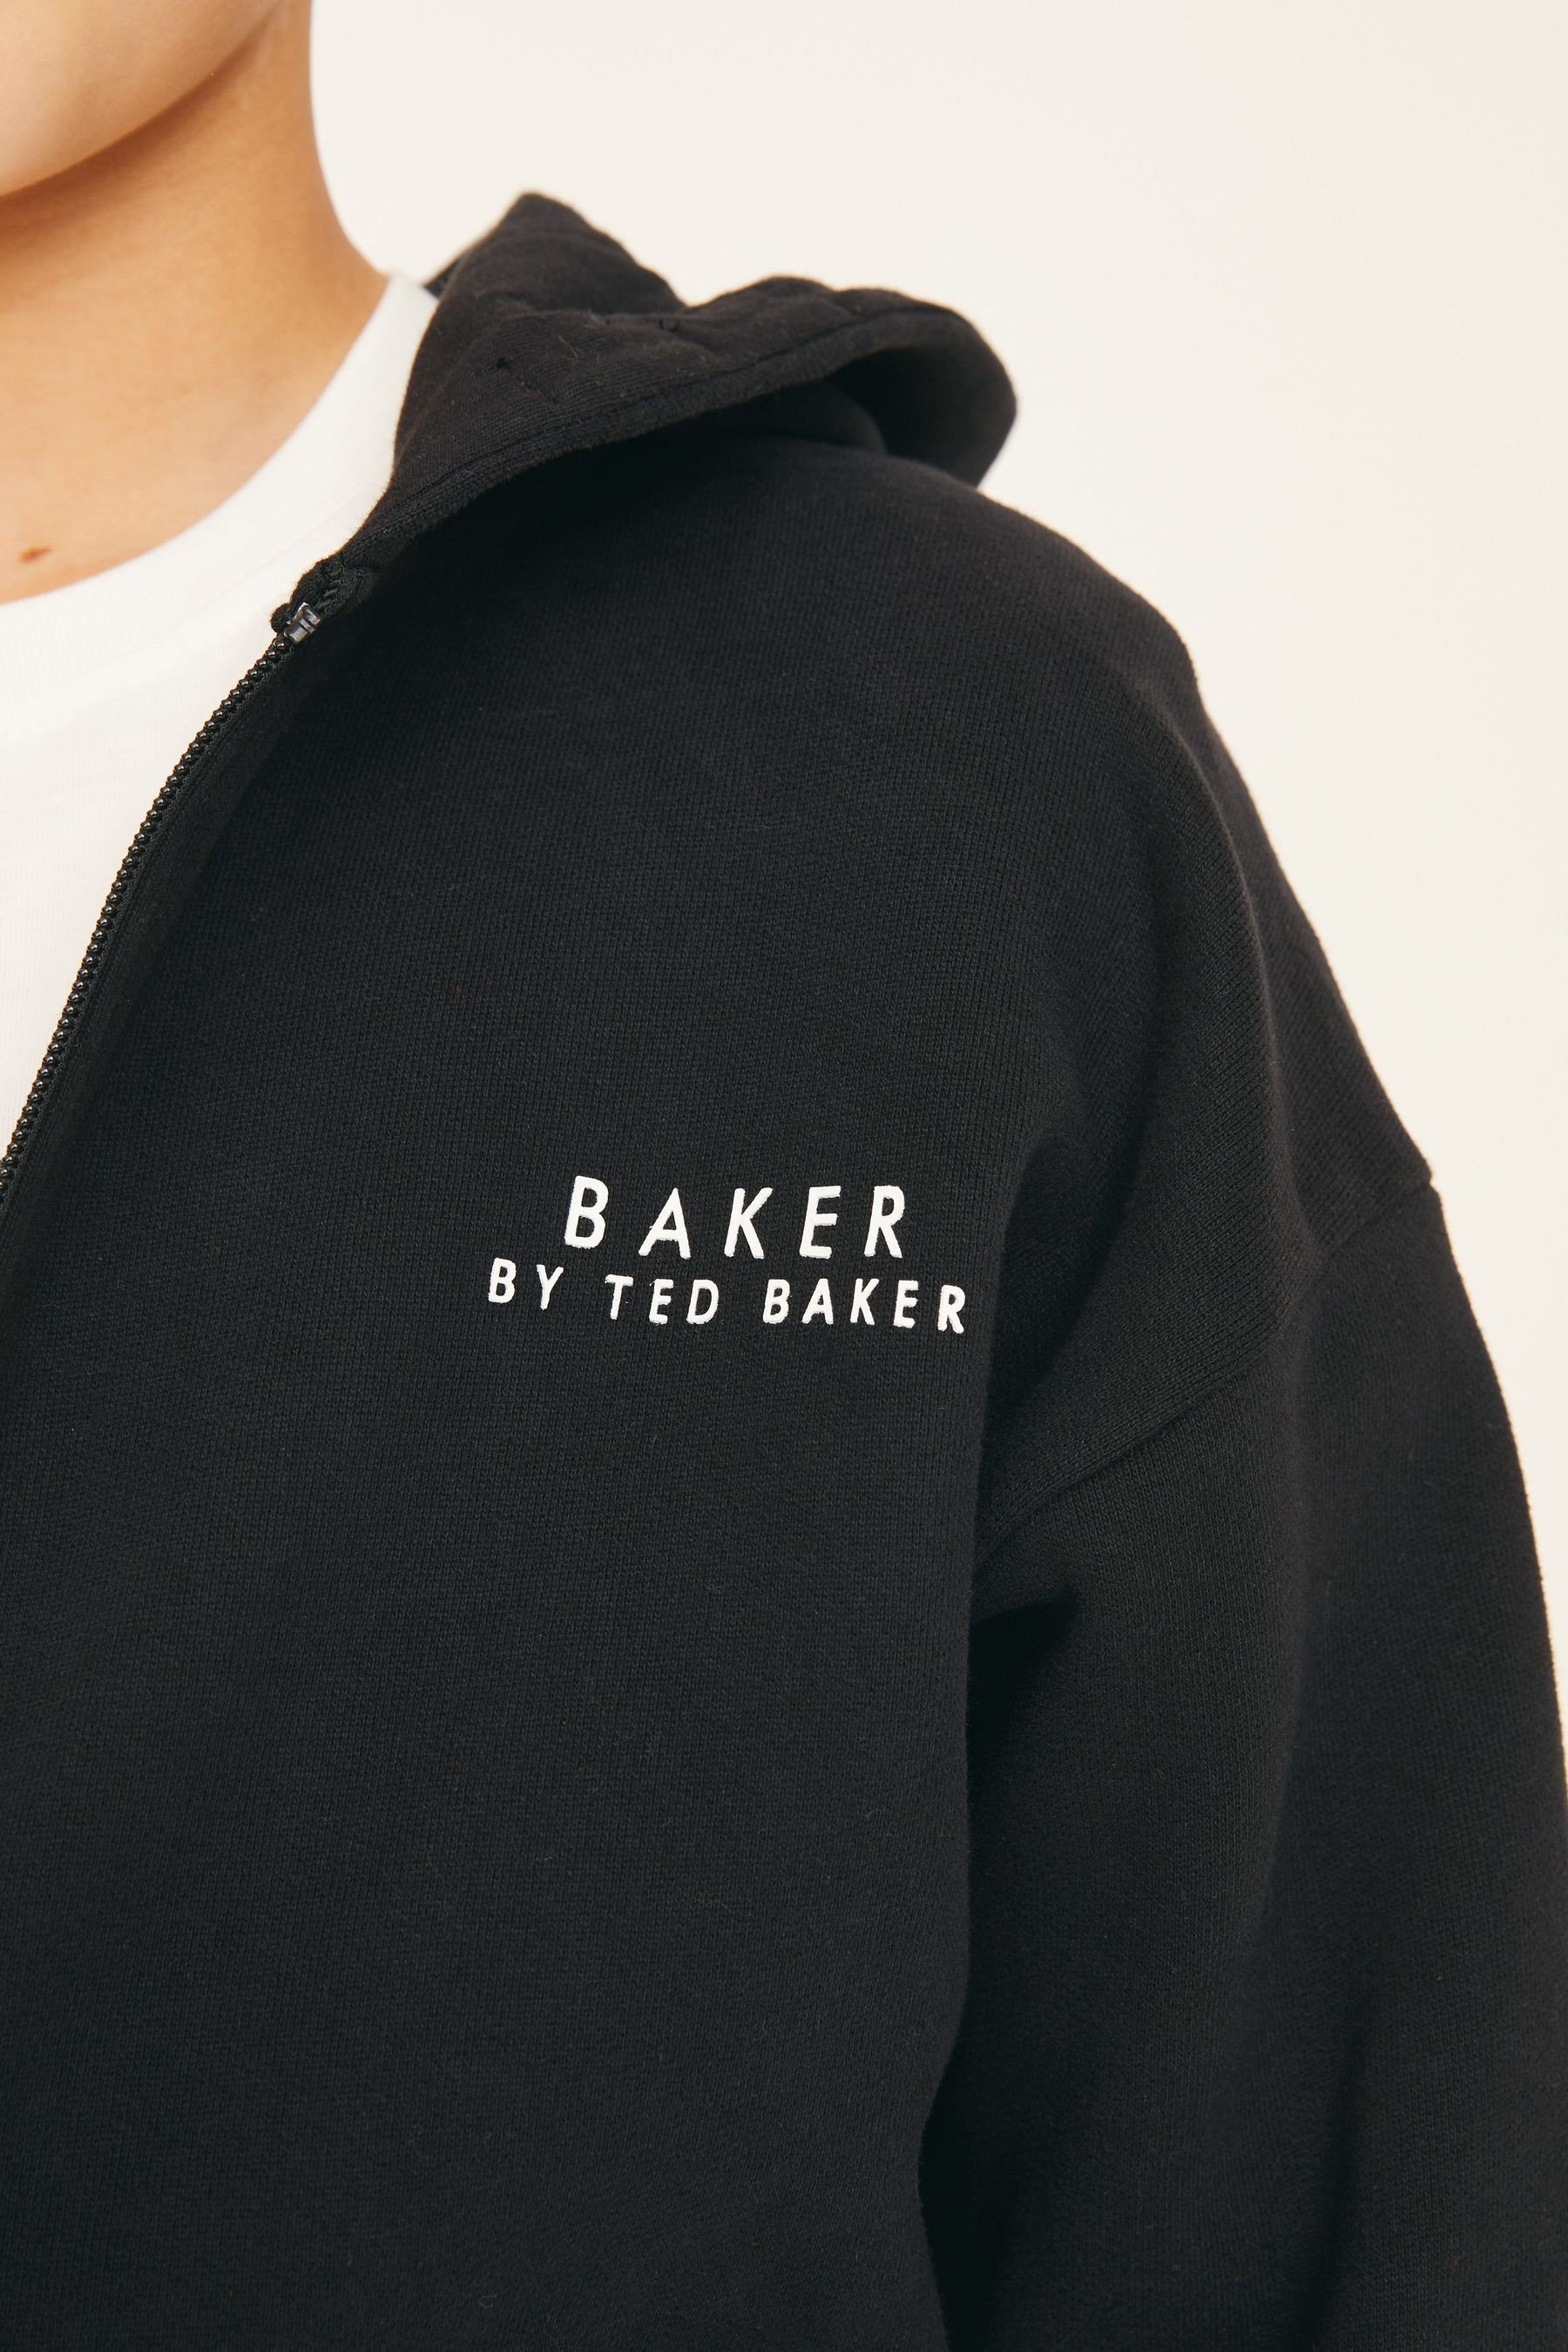 Baker by (2-tlg) Ted Baker by mit Baker Ted Baker Black Jogginganzug Sweatanzug Kapuzenjacke